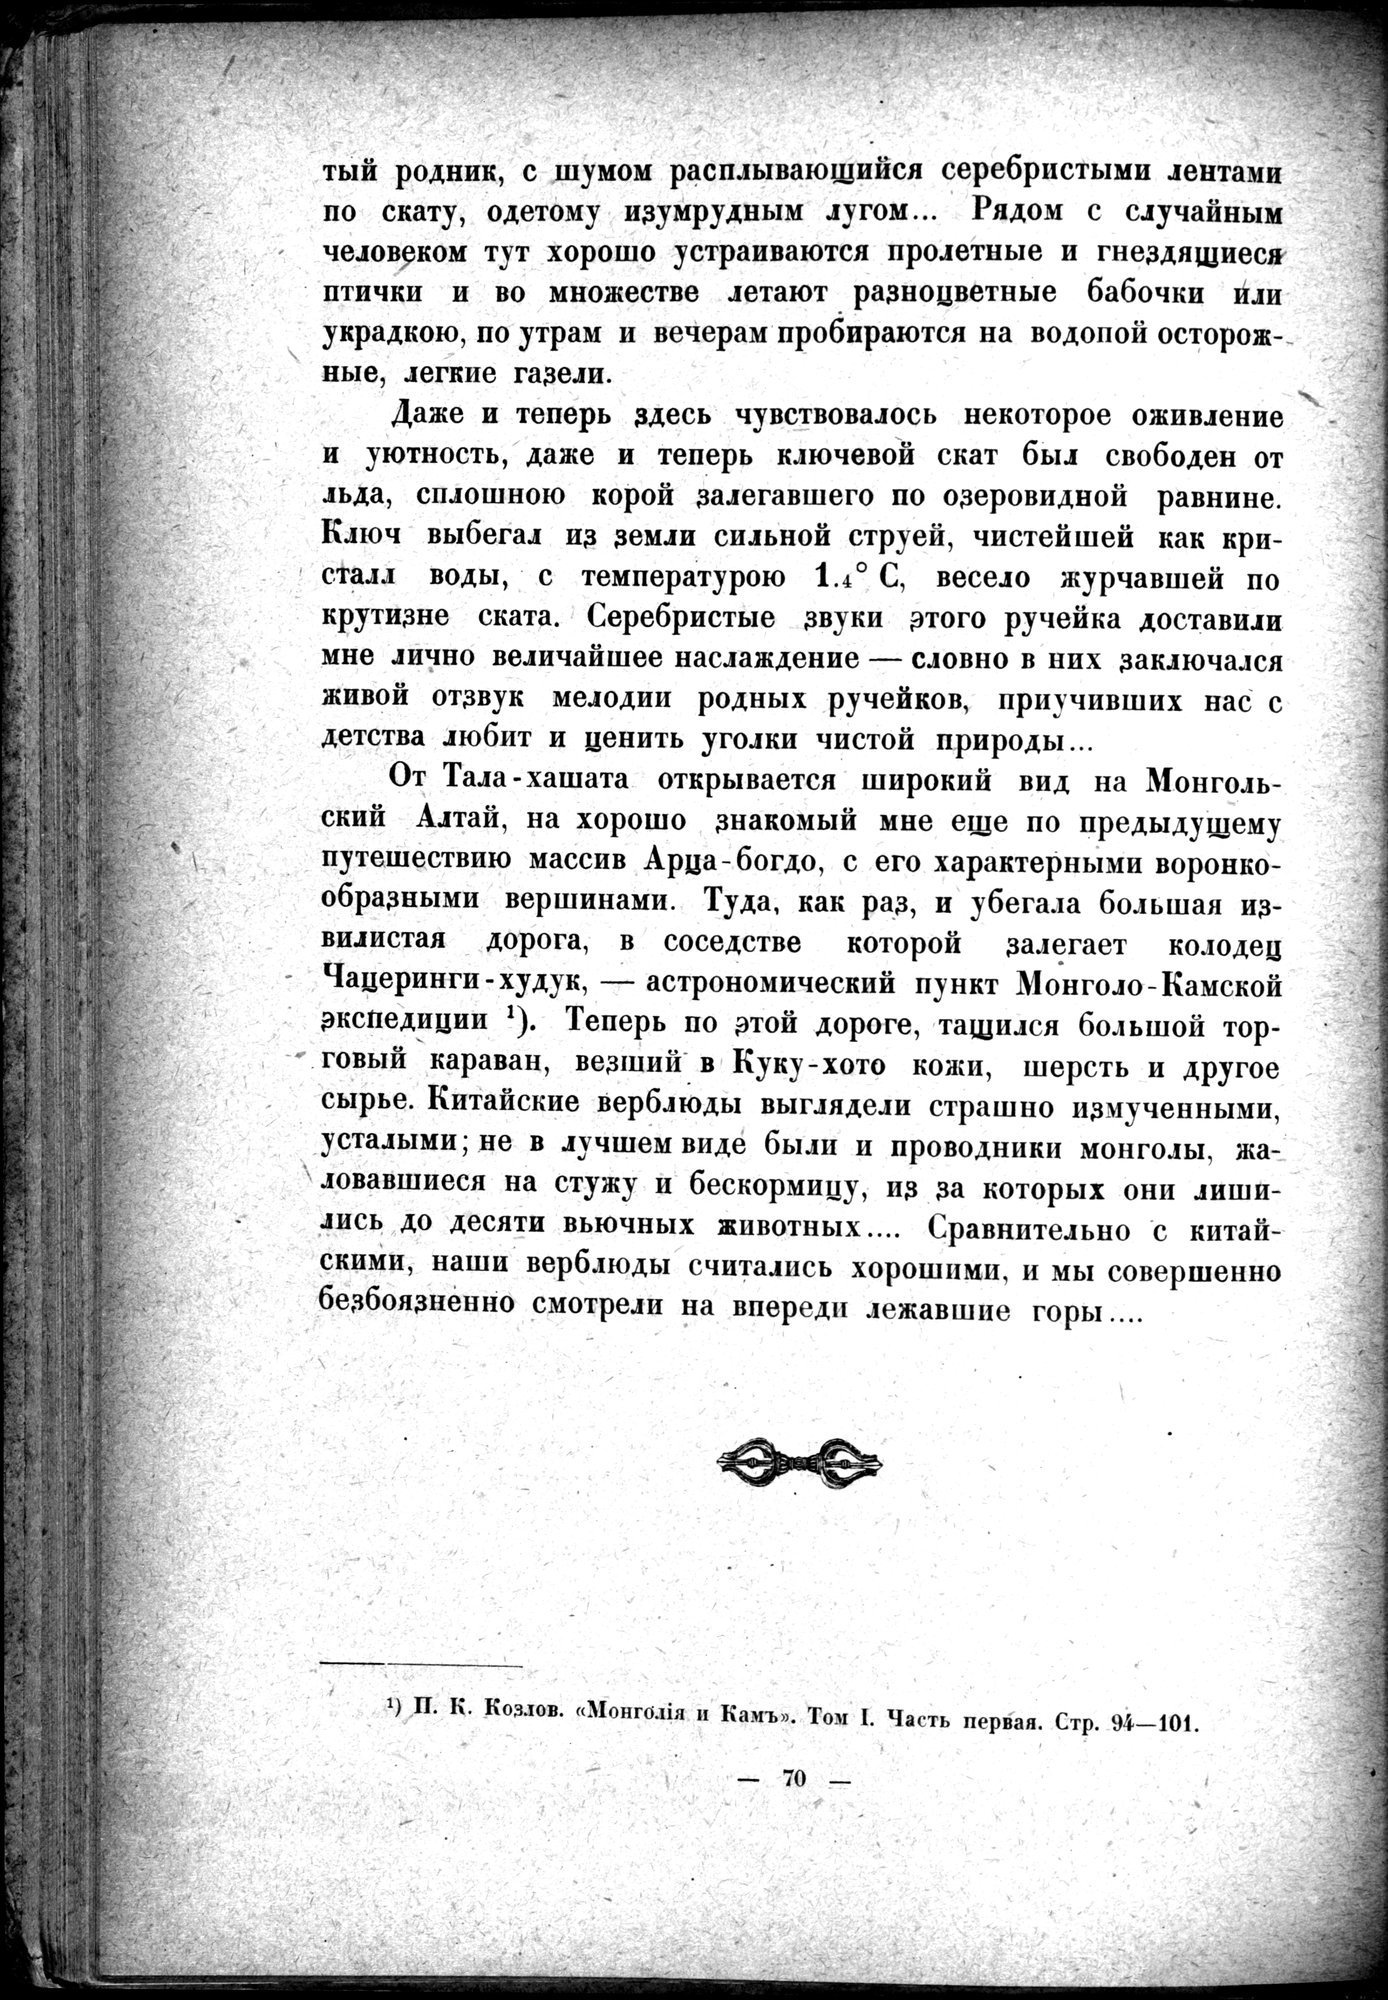 Mongoliya i Amdo i mertby gorod Khara-Khoto : vol.1 / Page 94 (Grayscale High Resolution Image)